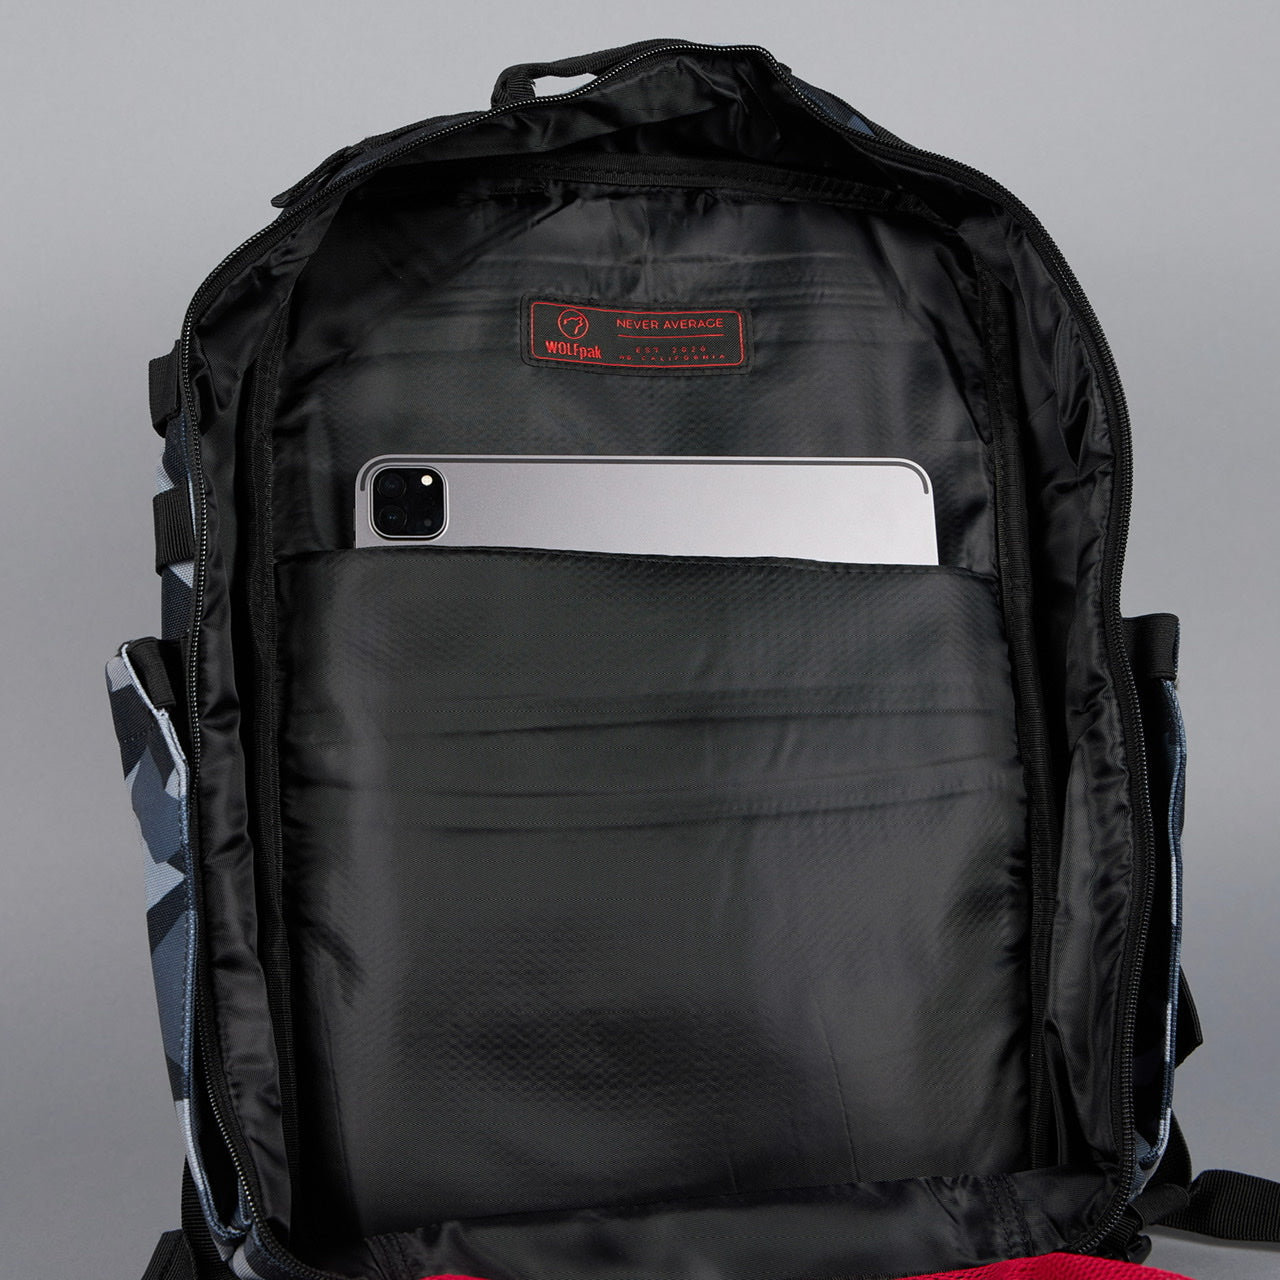 35L Backpack Splinter Camo Red Edition